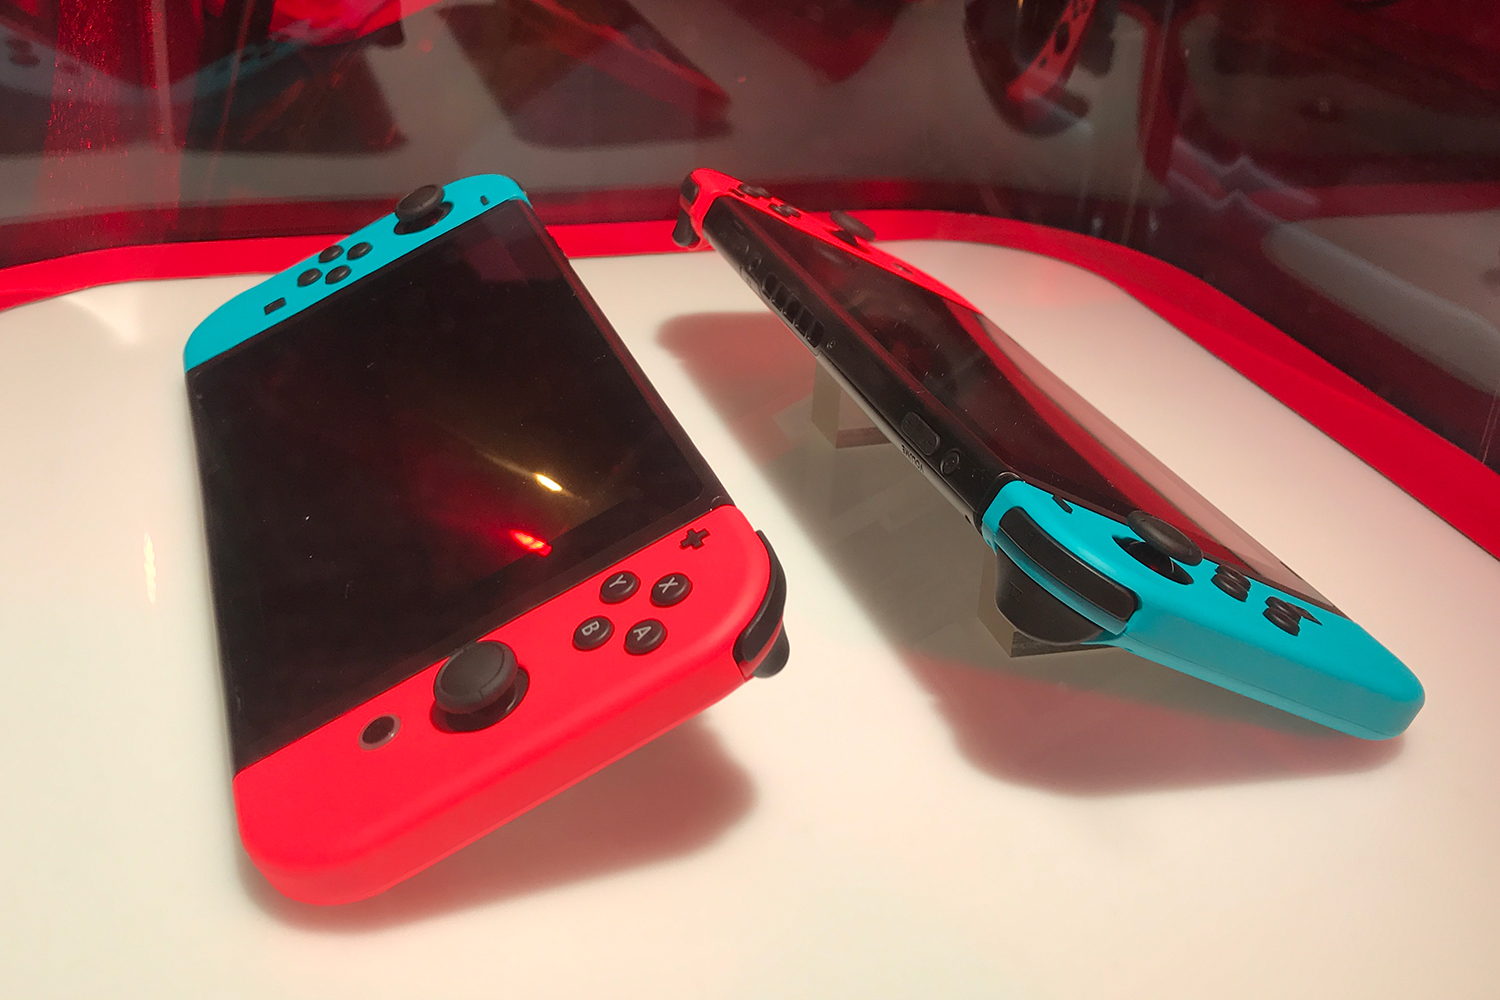 Nintendo Switch: Hands On